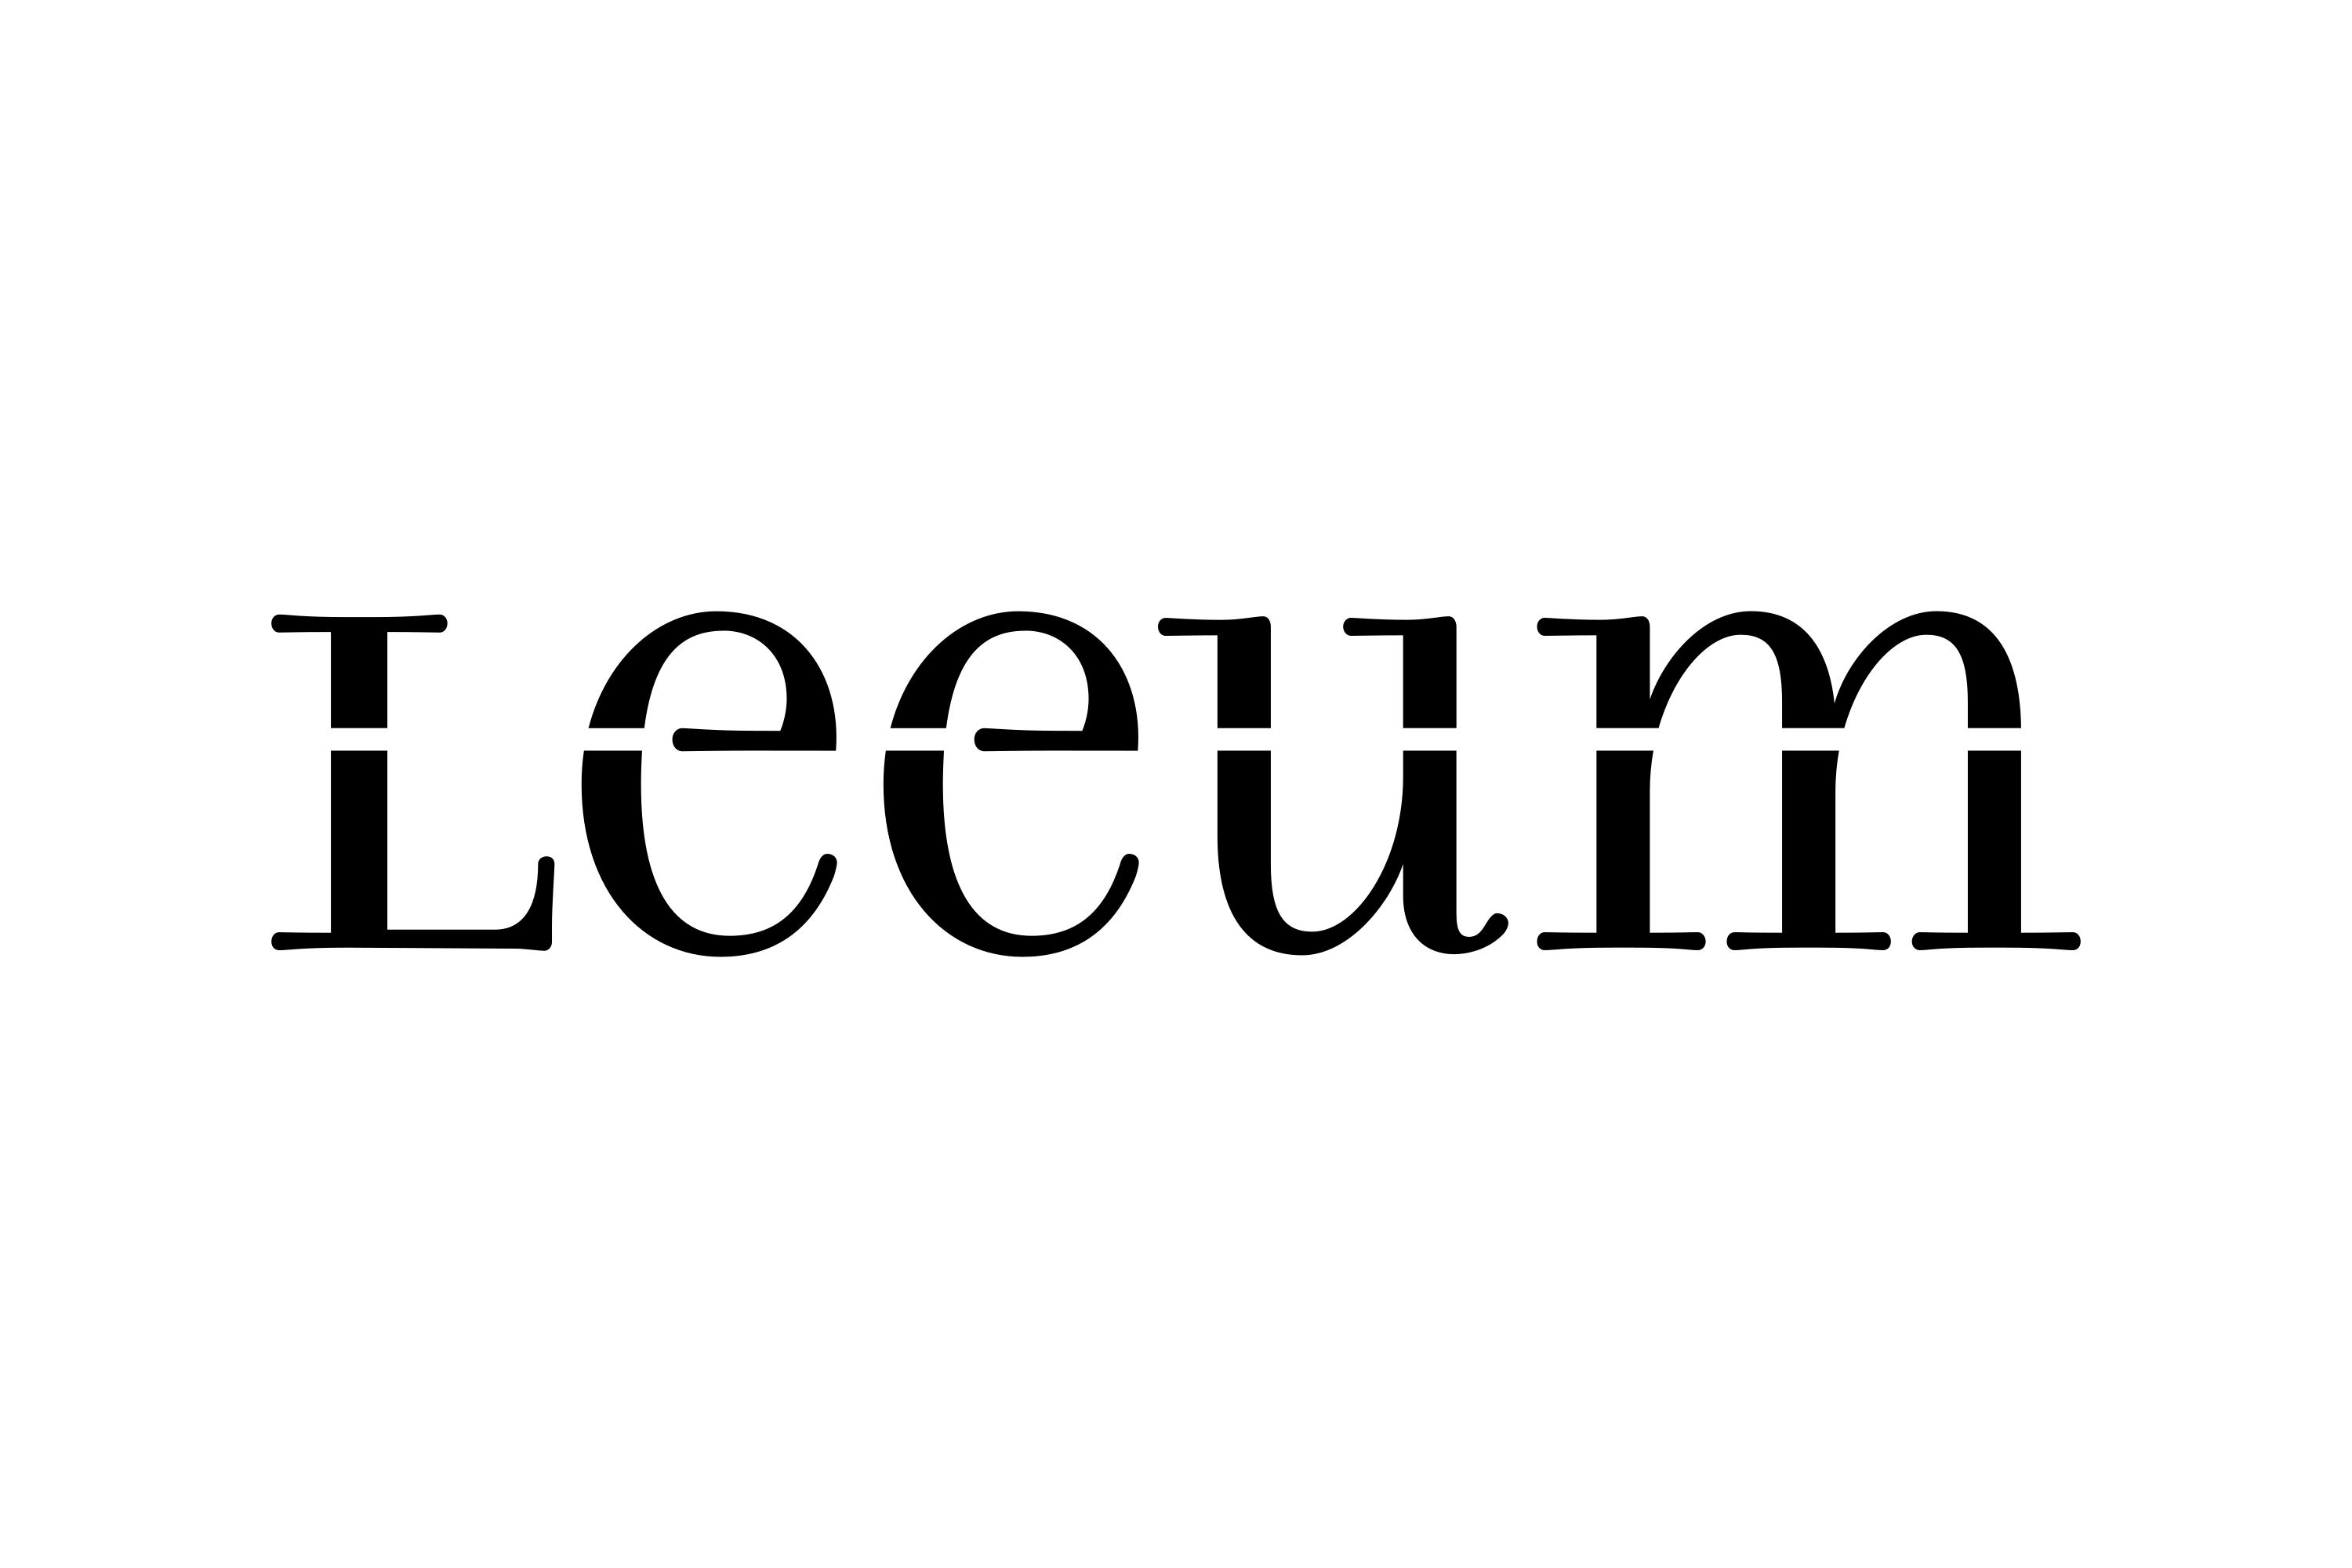 Download Leeum Samsung Museum Of Art Logo In Svg Vector Or Png File Format Logo Wine